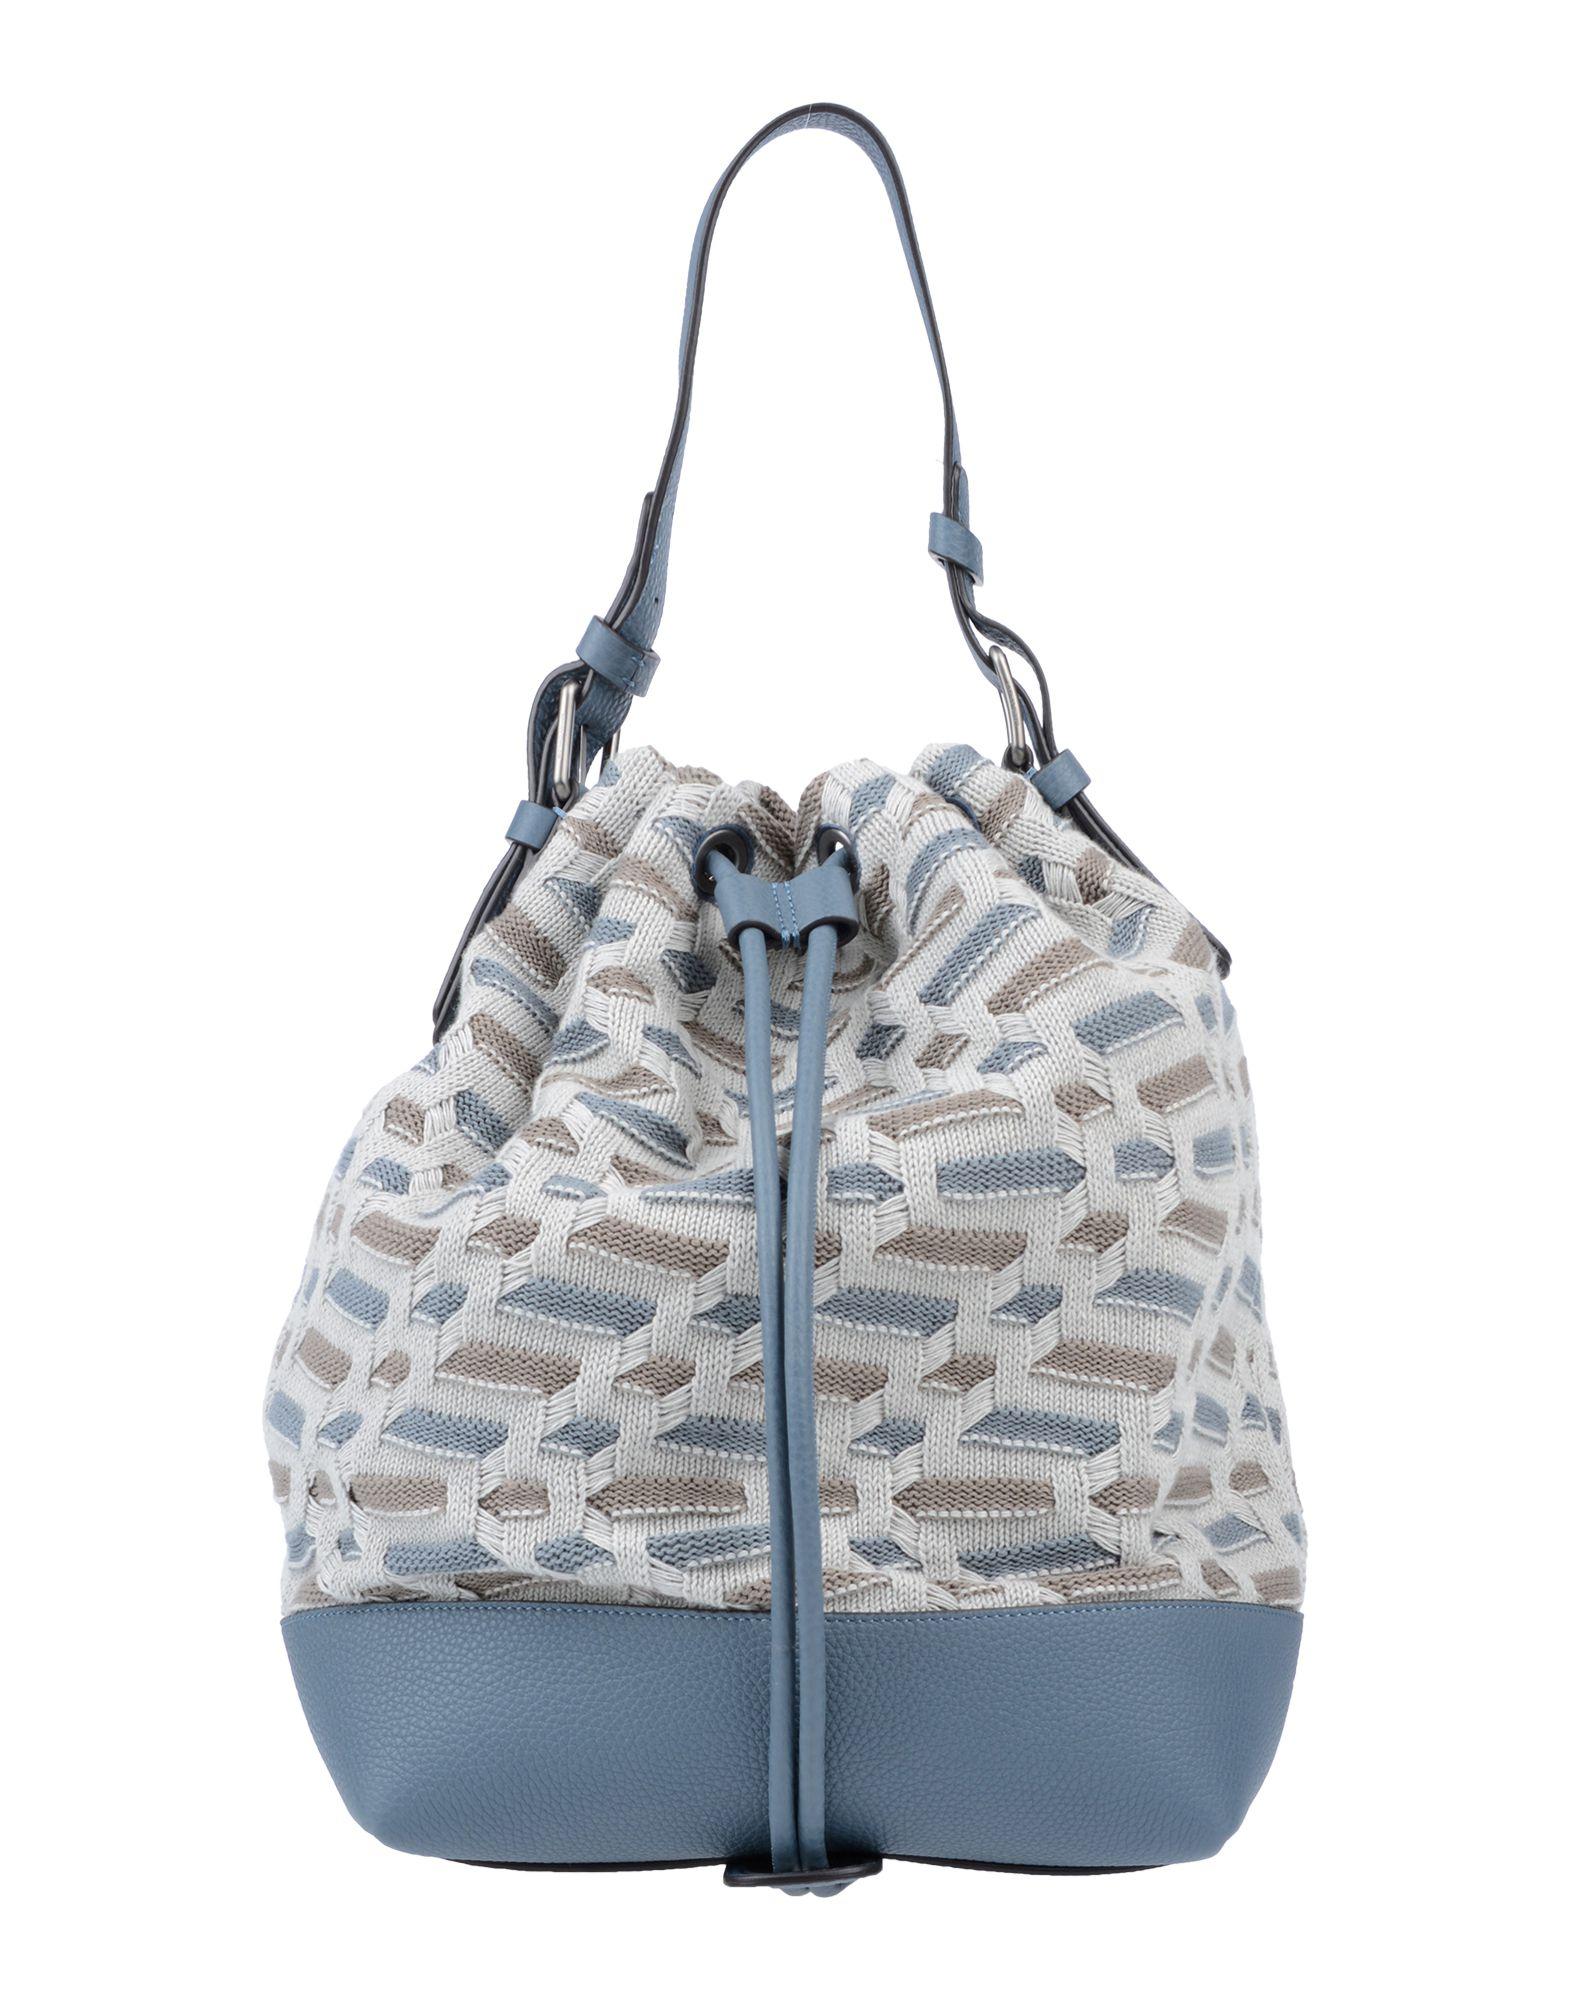 Giorgio Armani Leather Handbag in Light Grey (Gray) - Lyst